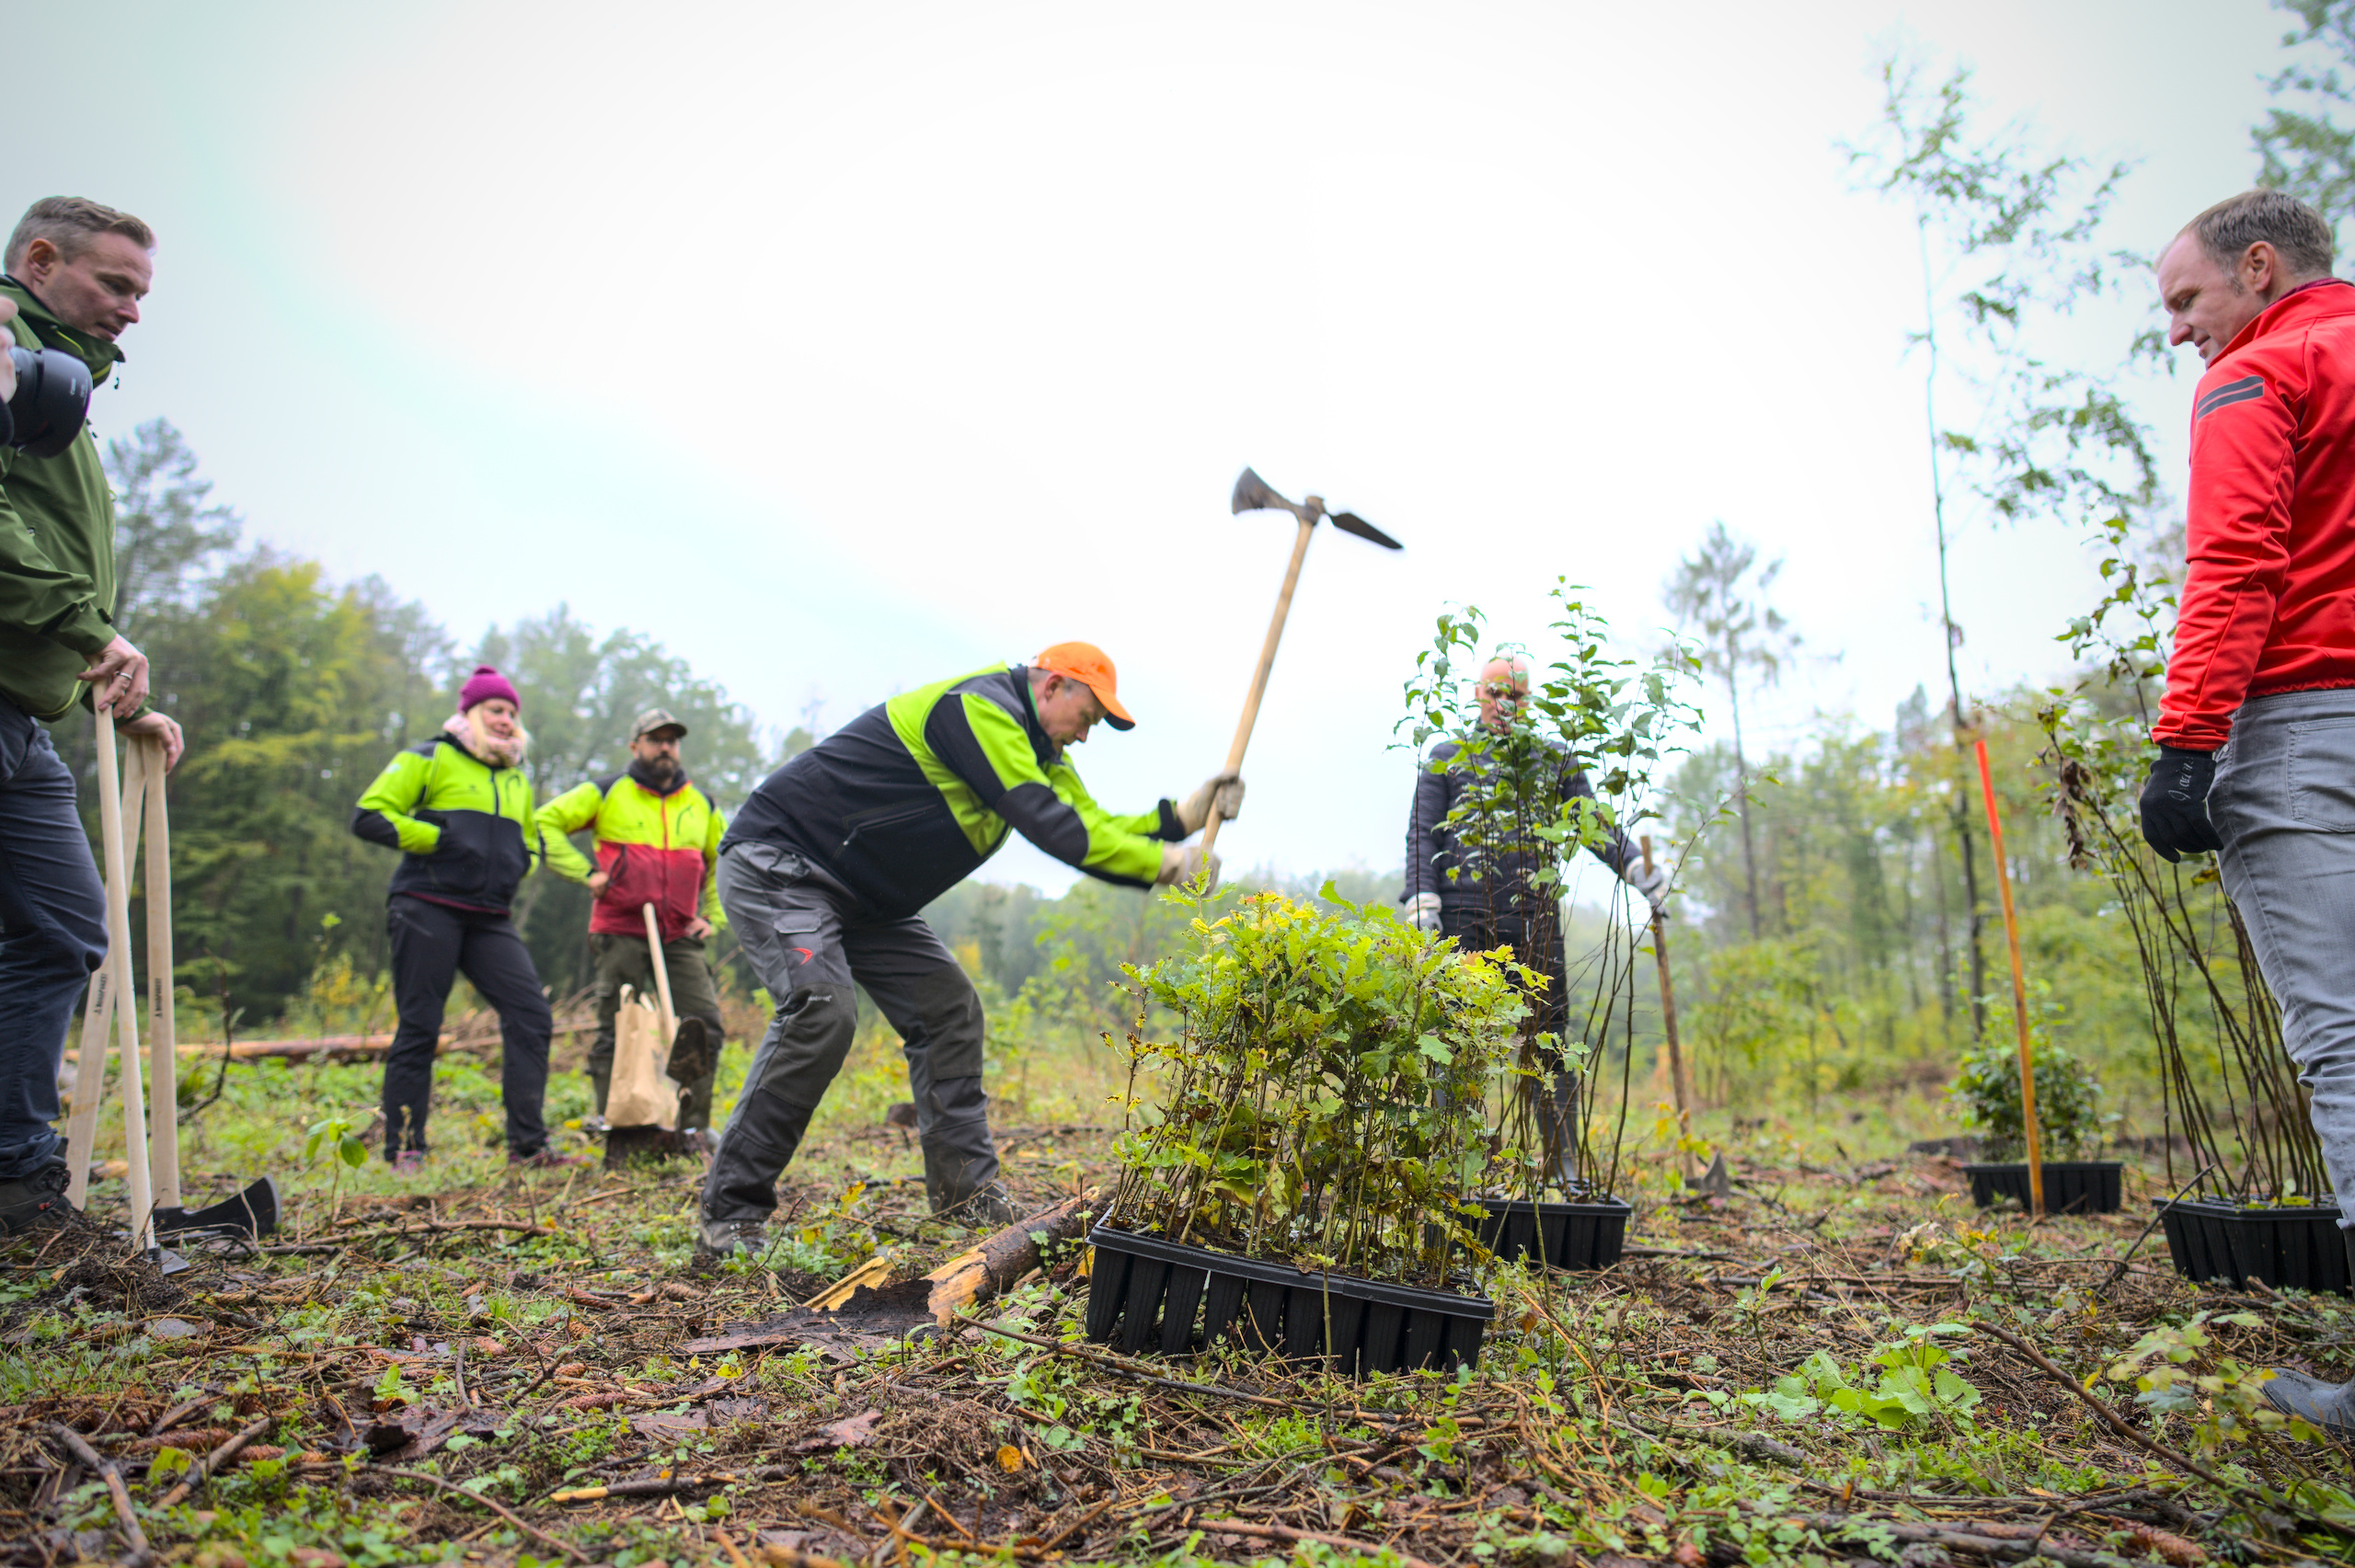 Stadtradeln Erfurt 2020 - tree planting campaign of 275 trees